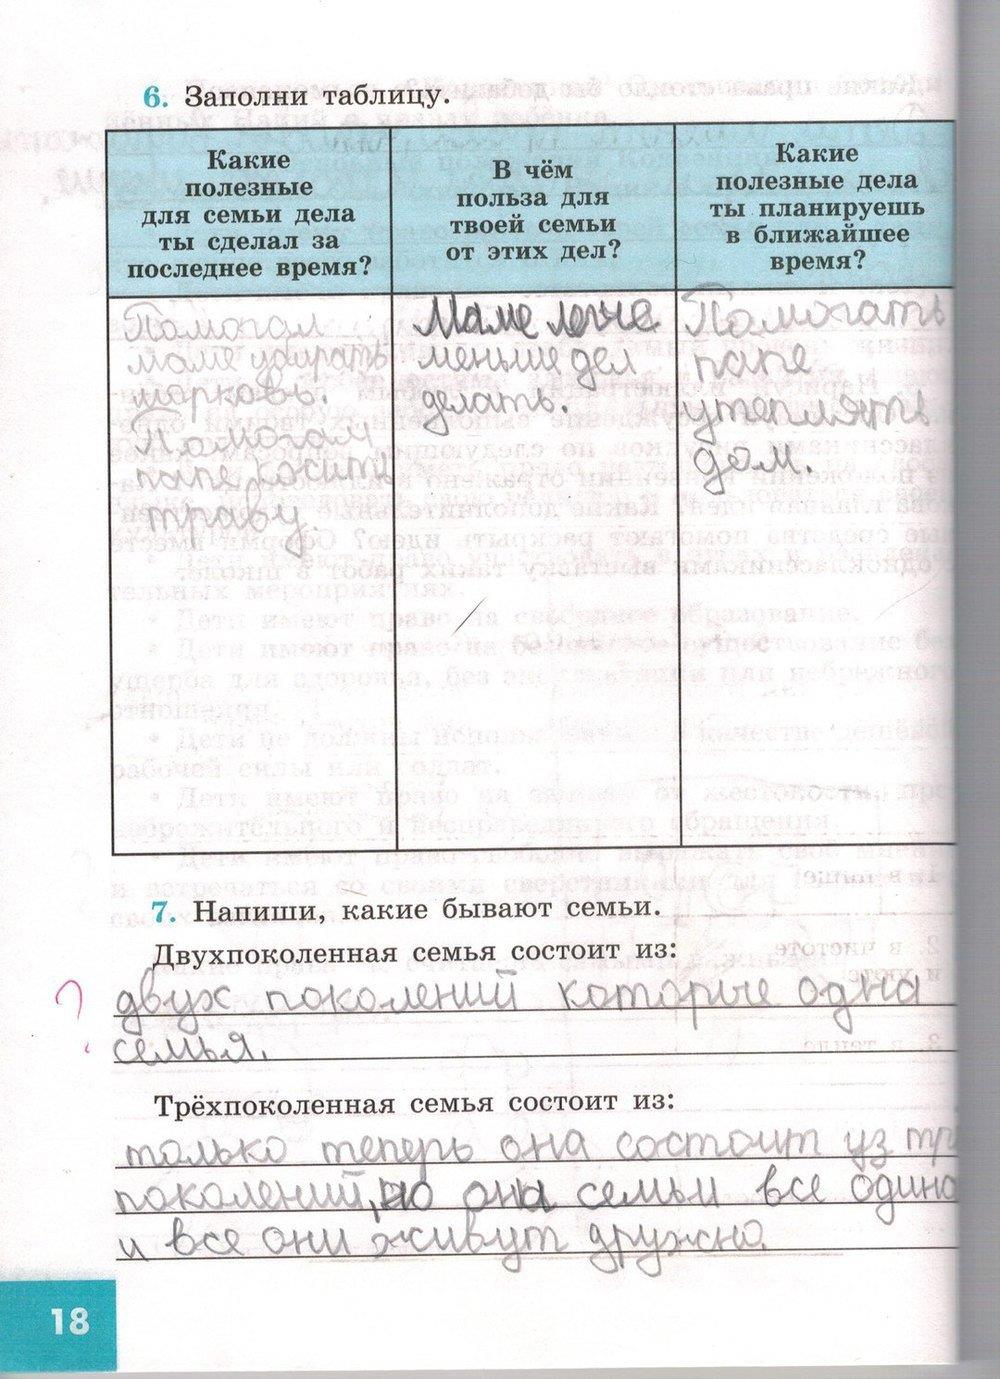 гдз 5 класс рабочая тетрадь страница 18 обществознание Иванова, Хотеенкова